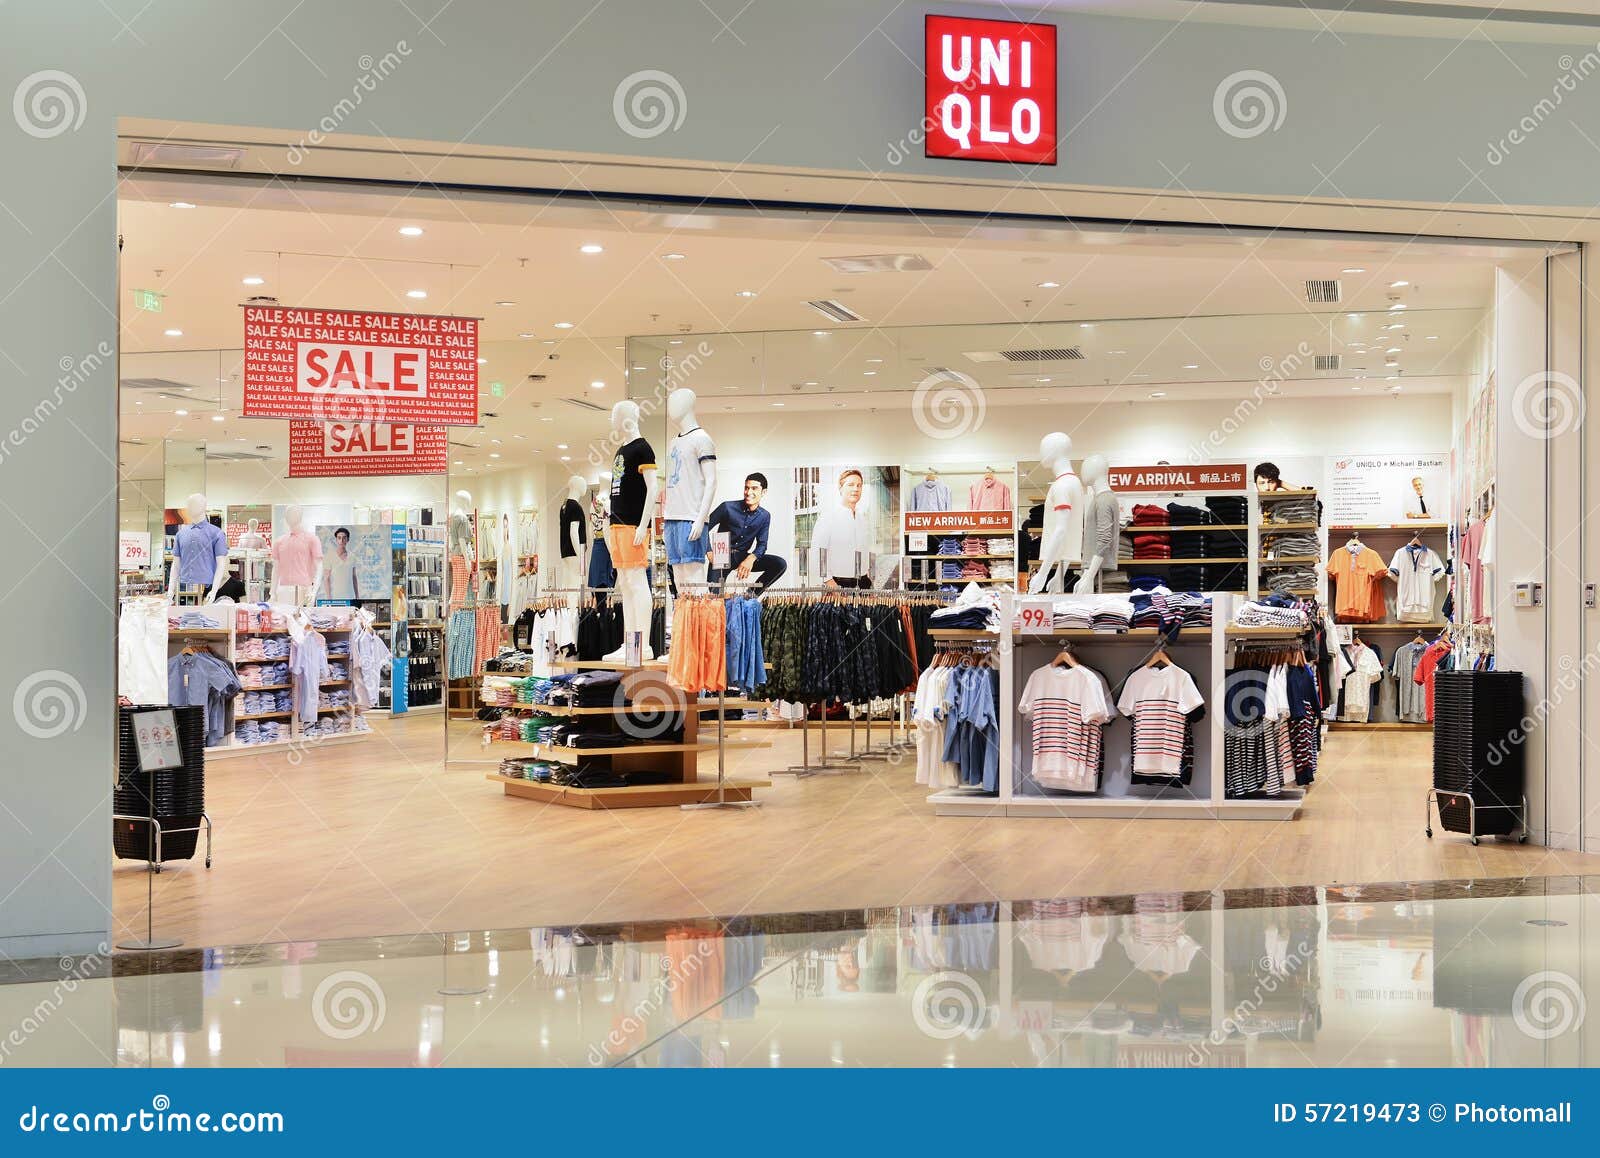 Uniqlo fashion shop editorial stock photo. Image of front - 57219473